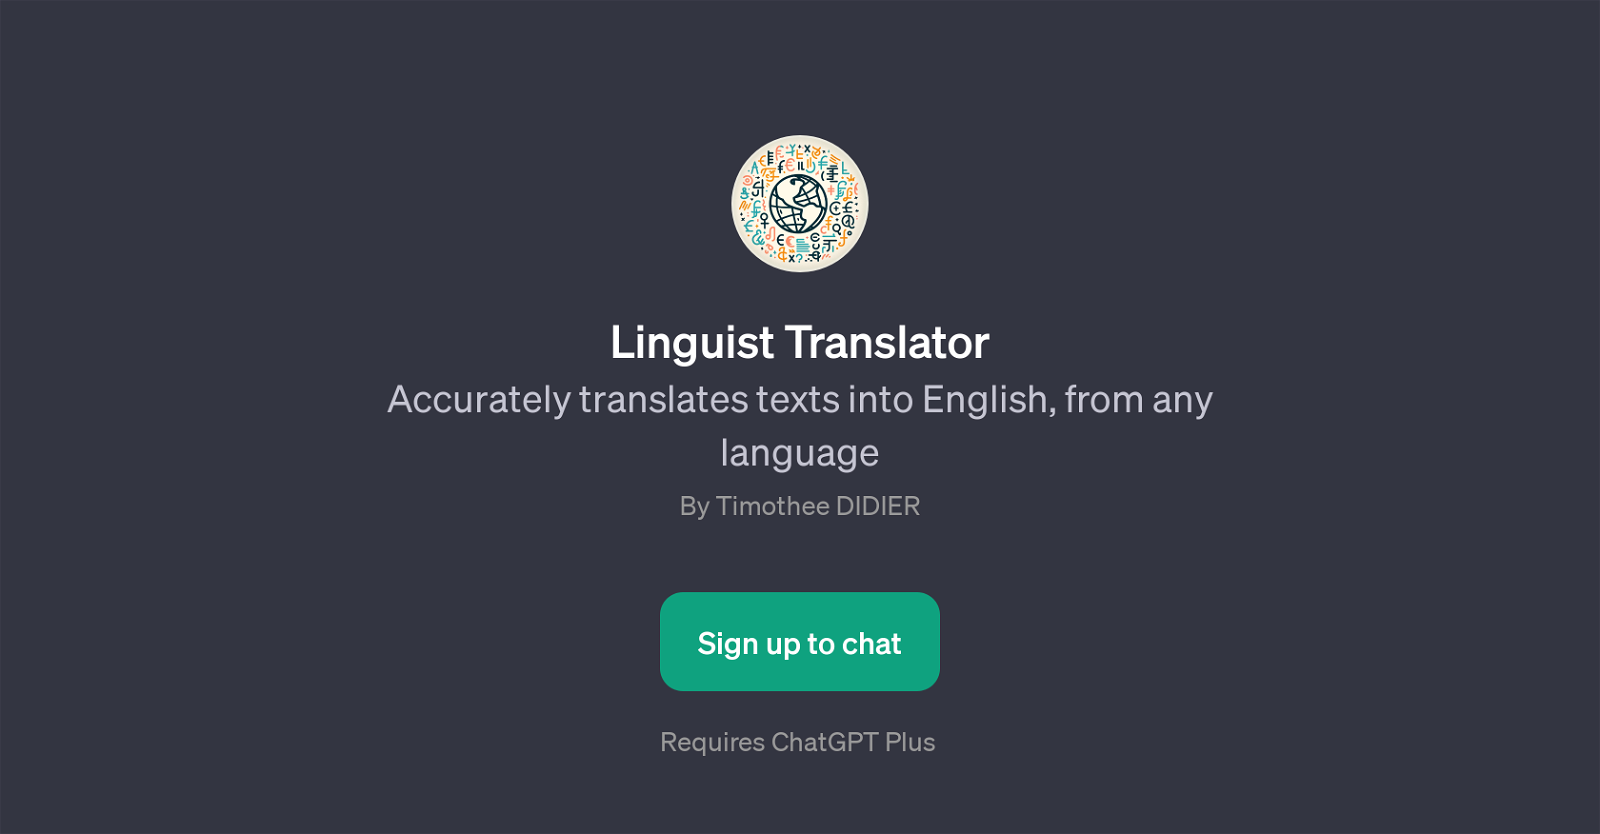 Linguist Translator website